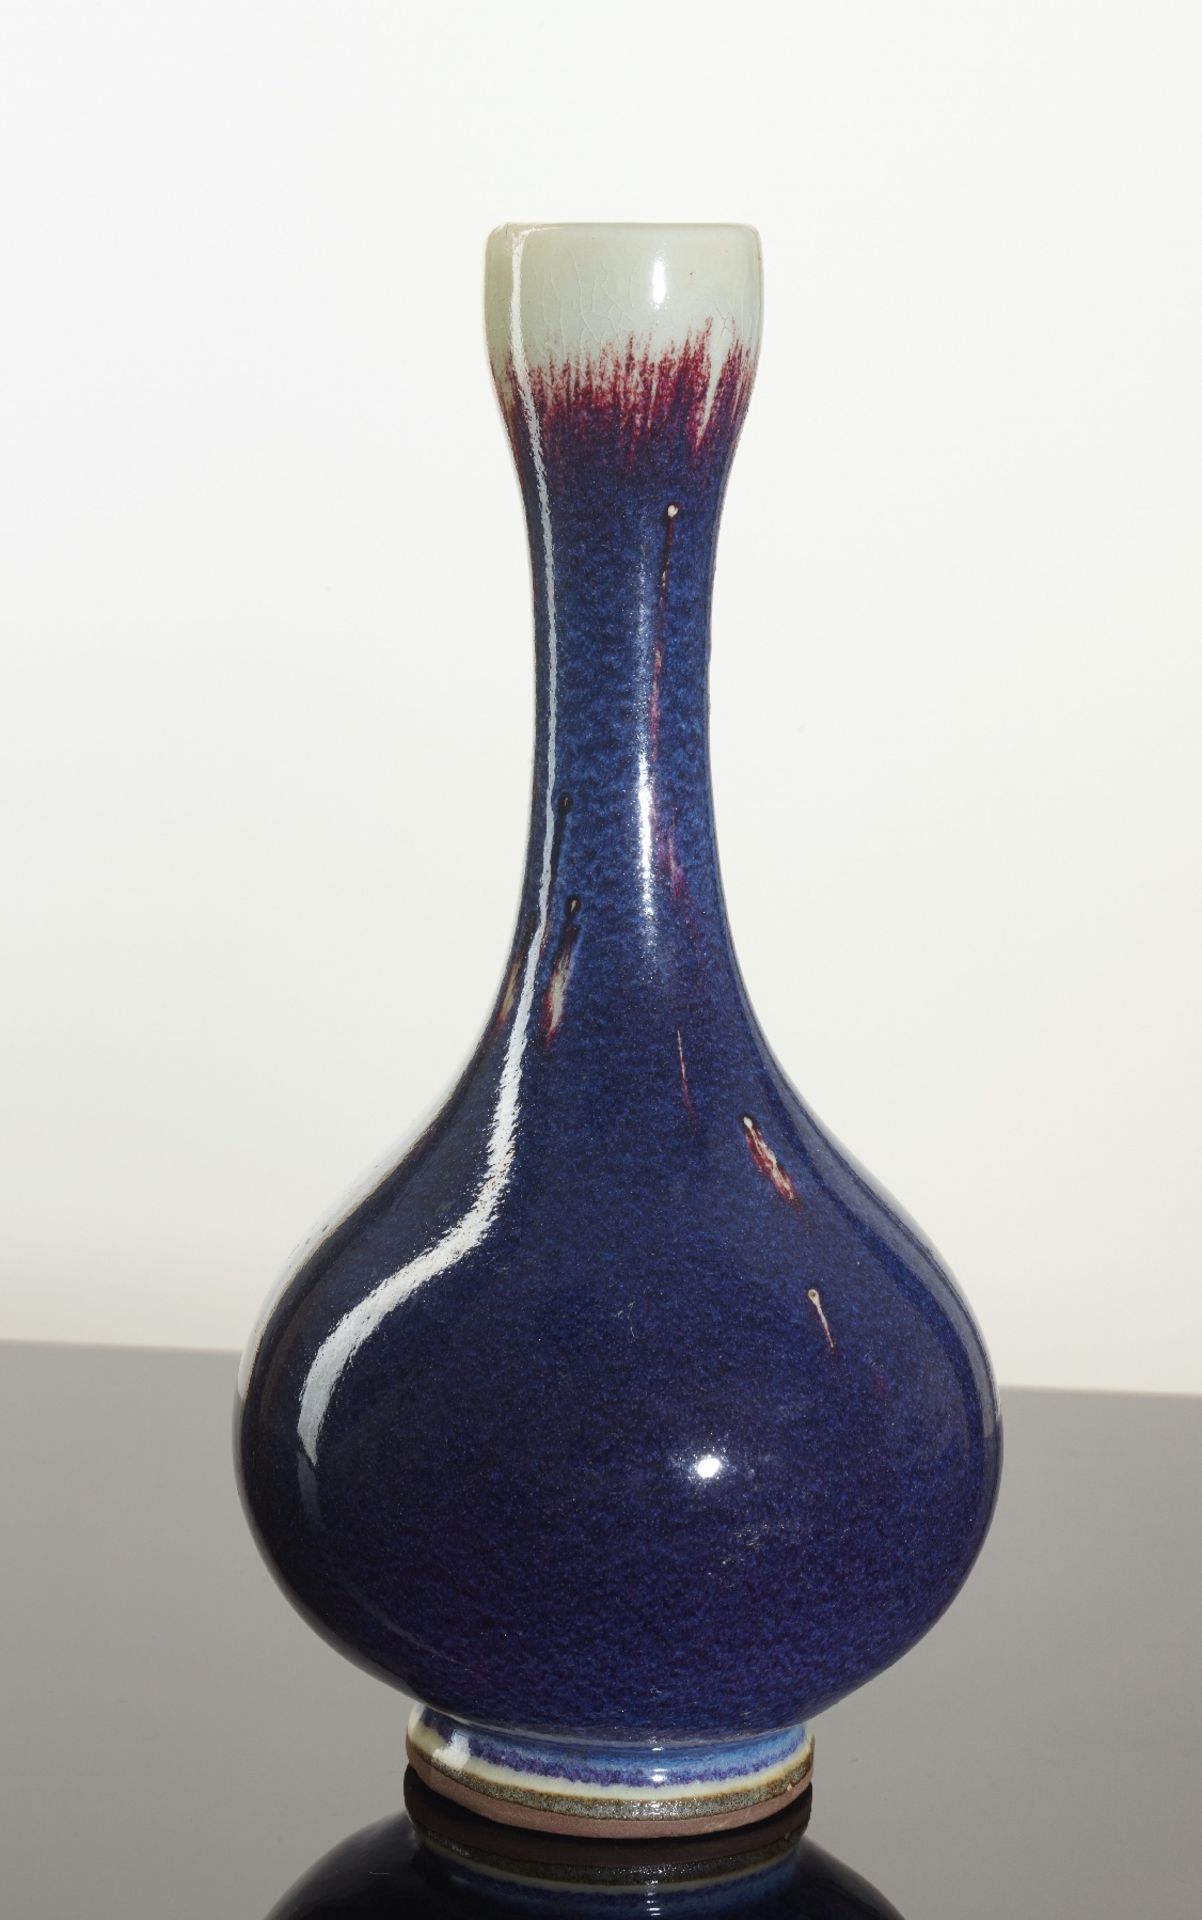 Glasierte Keramik (Steinzeug) China, 20. Jahrhundert | Glazed ceramic (stoneware) China, 20th Centu - Image 2 of 5